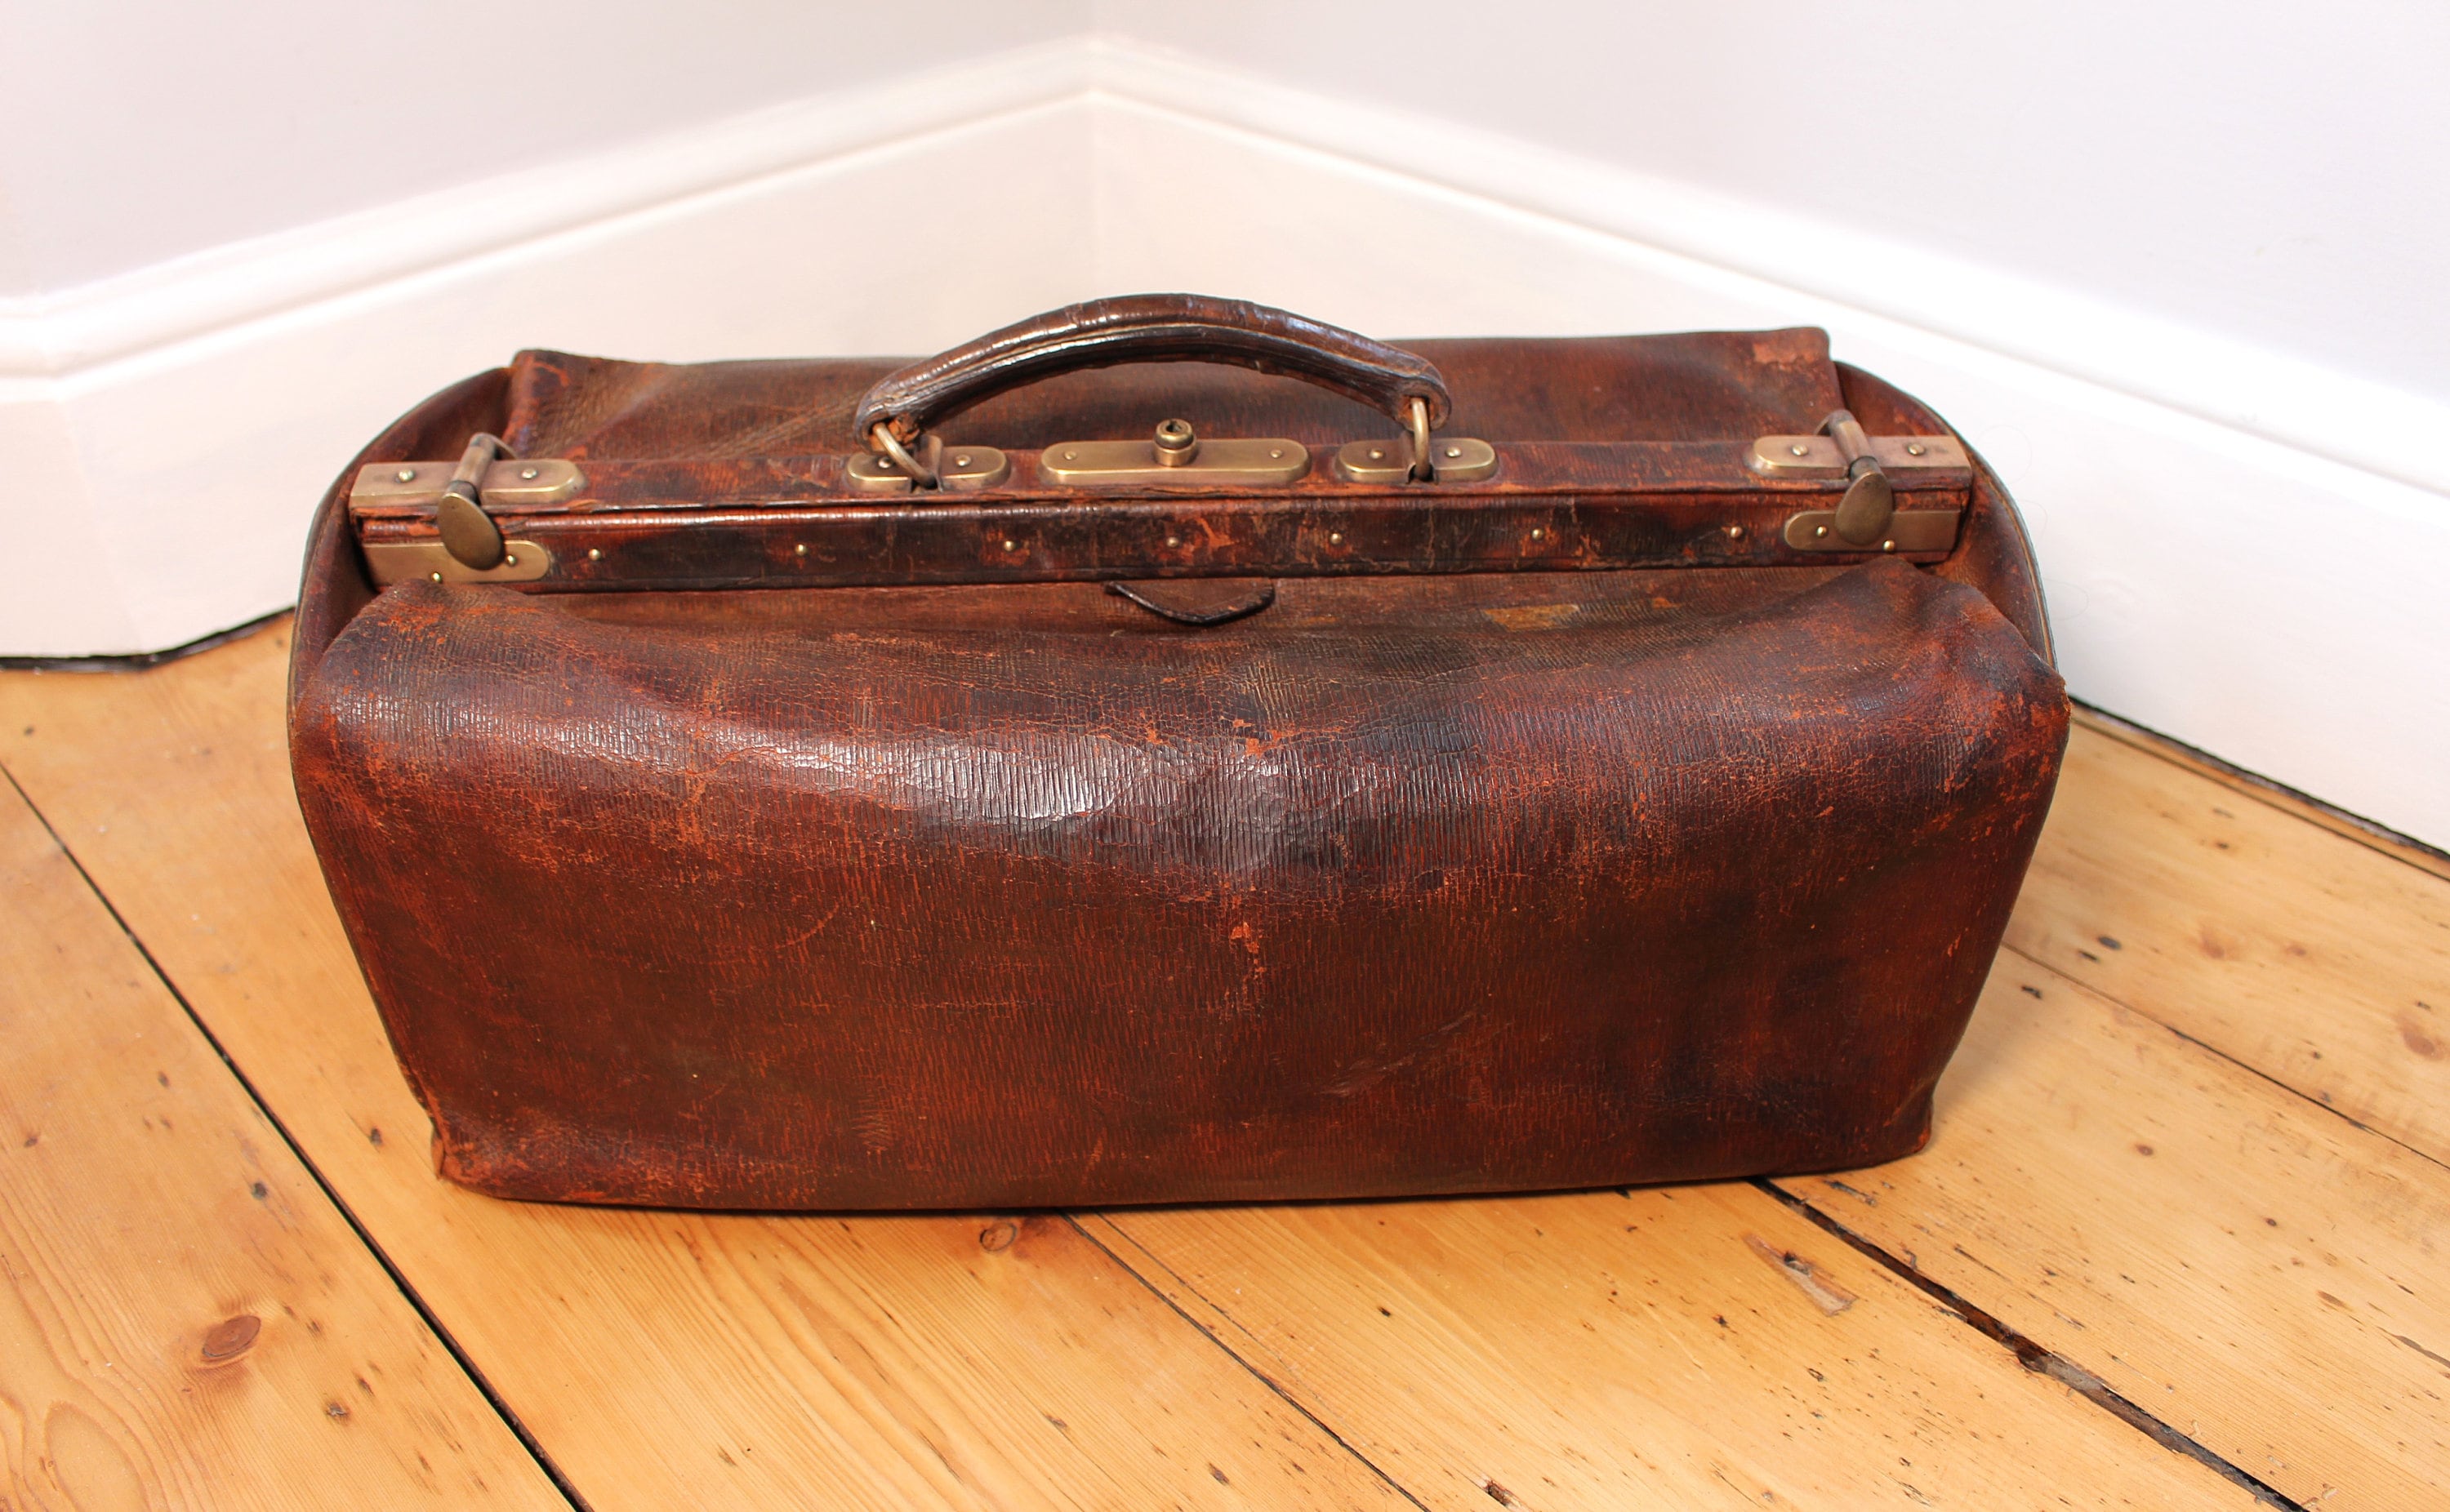 Search Results  Gladstone bag, Victorian doctor, 1900 fashion